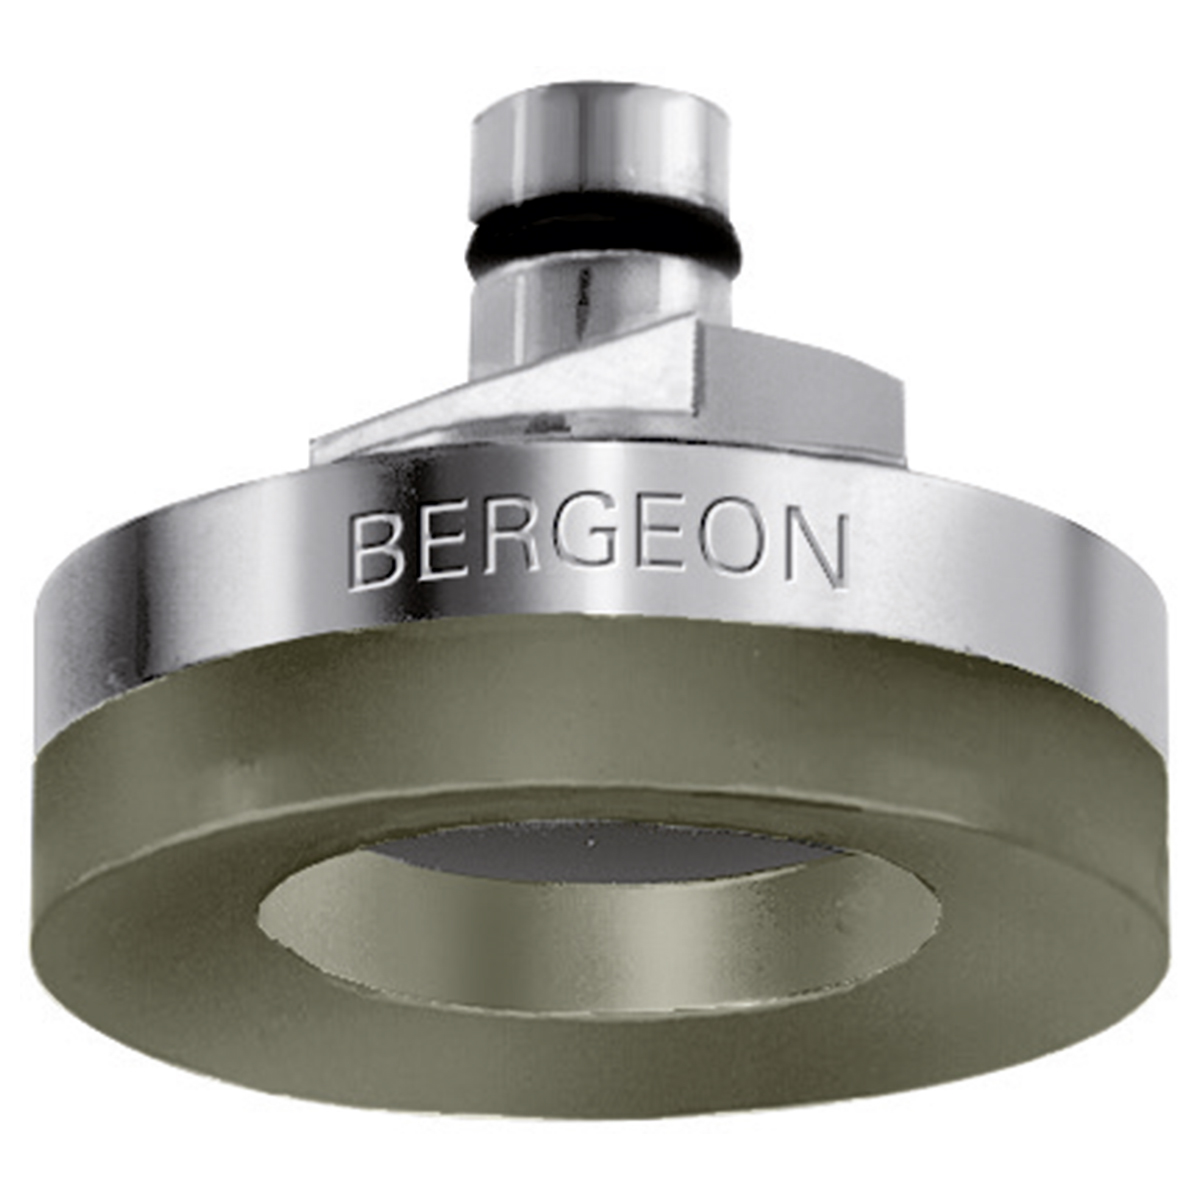 Bergeon 5700-62-34 Runde obere Saugstempel aus Adipren, 34 mm